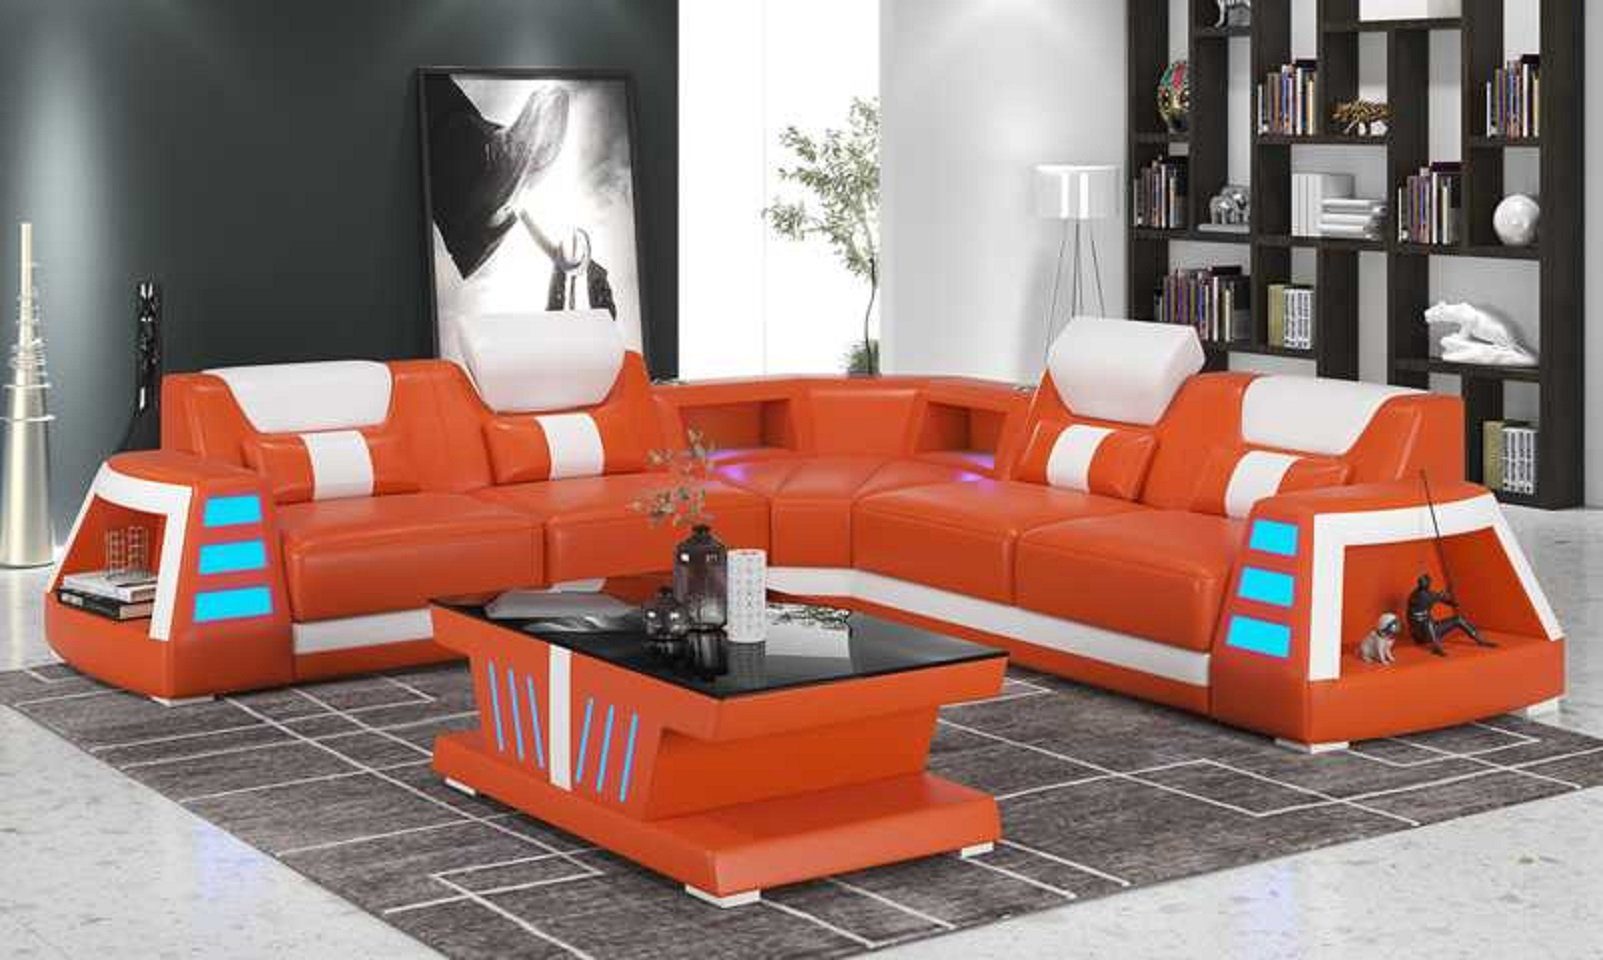 JVmoebel Form L Couch Teile, in 3 Ecksofa Orange Eckgarnitur, Made Kuunstleder Couchen Sofa Ecksofa Luxus Europe